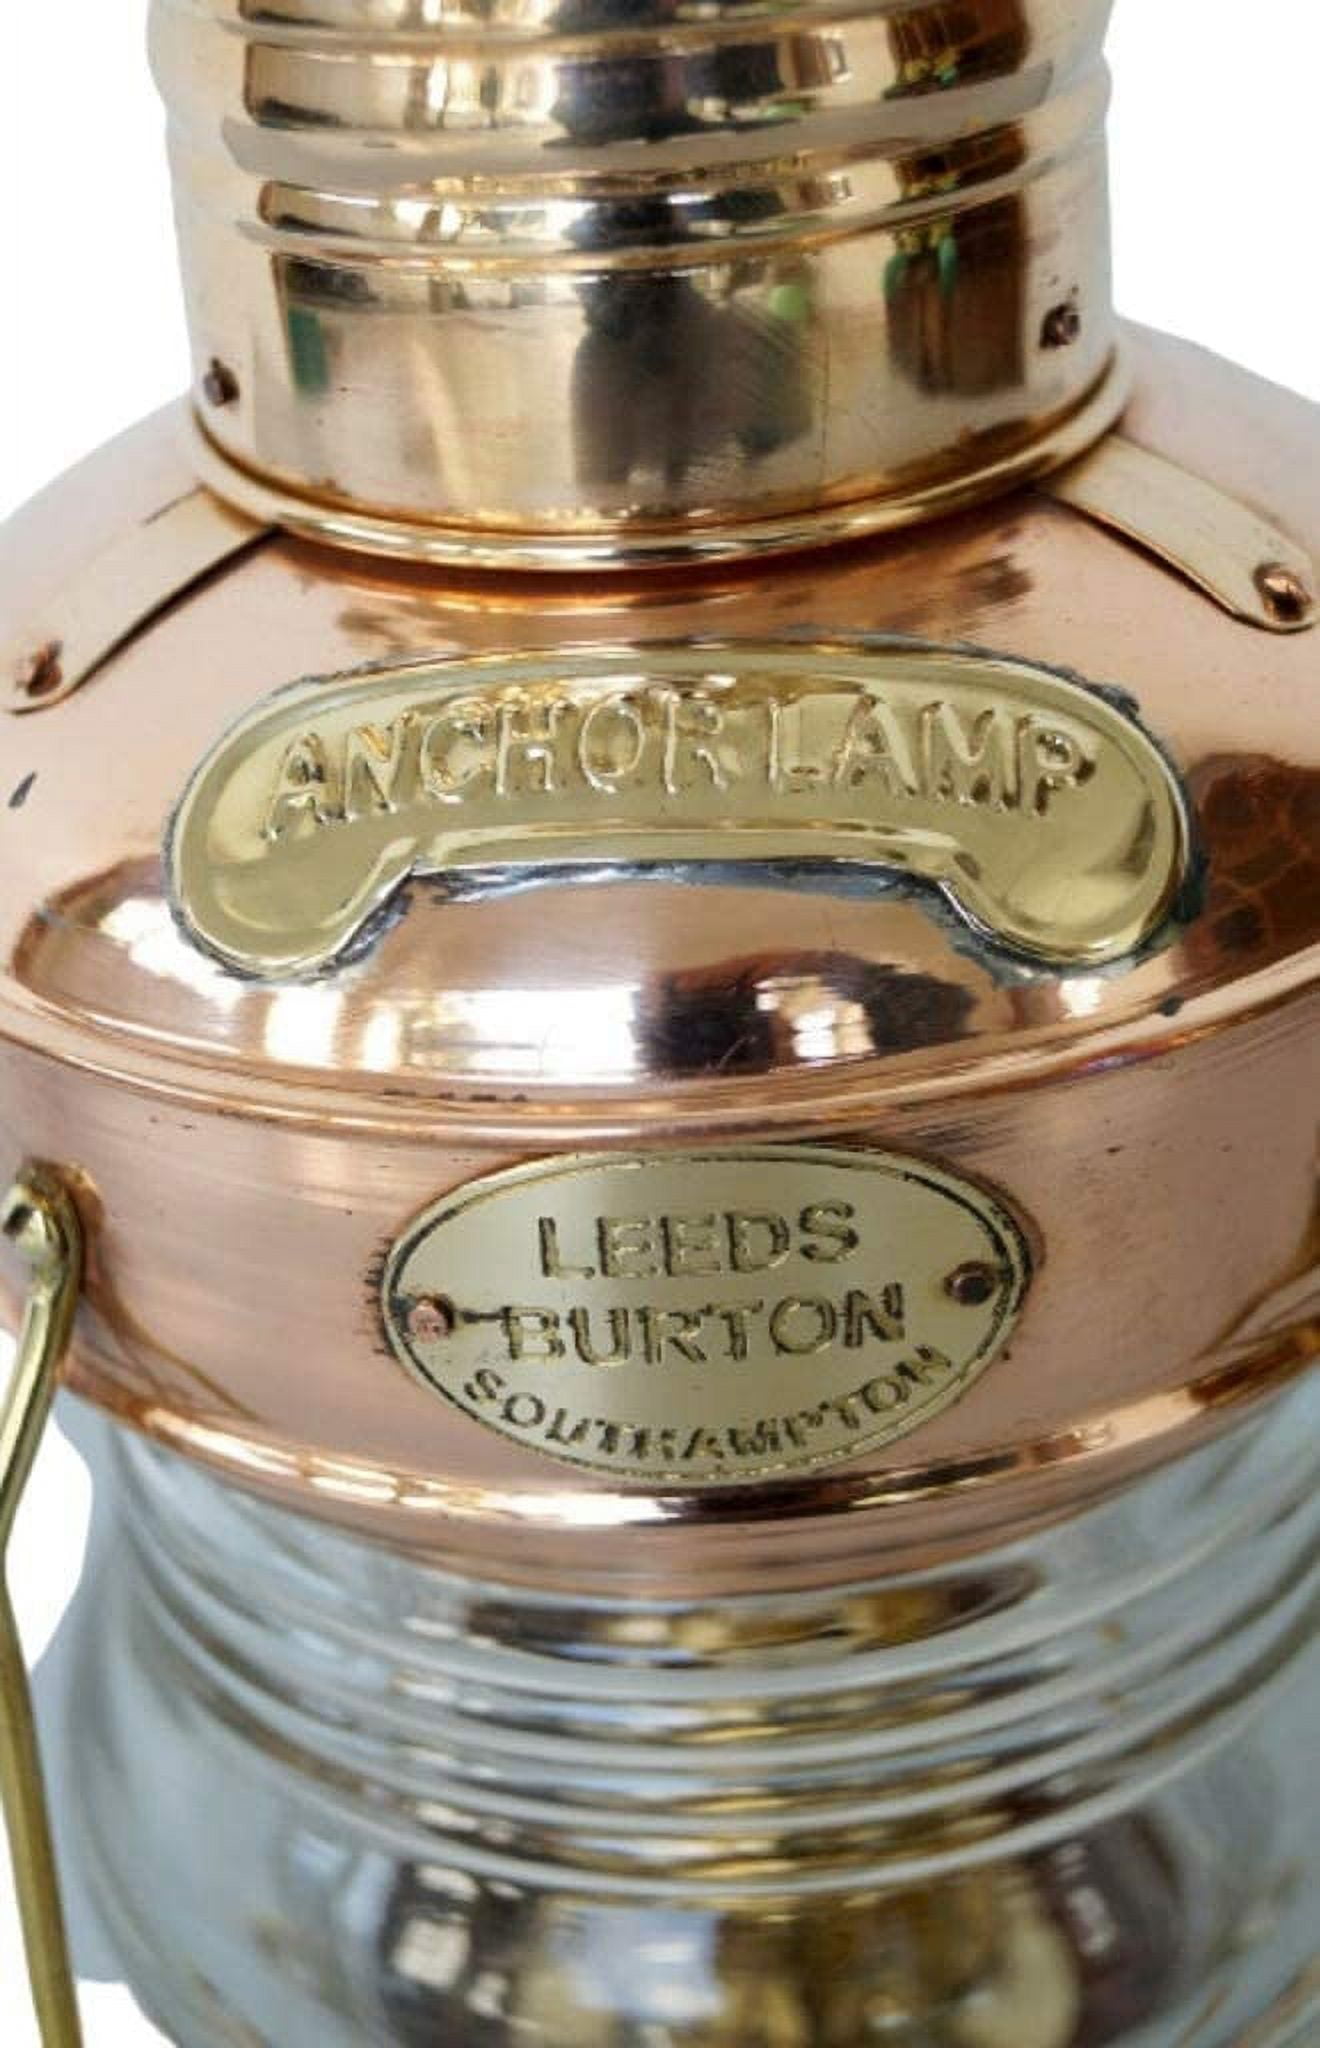 Brass & Copper Anchor Oil Lamp Leeds Burton Nautical Maritime 14